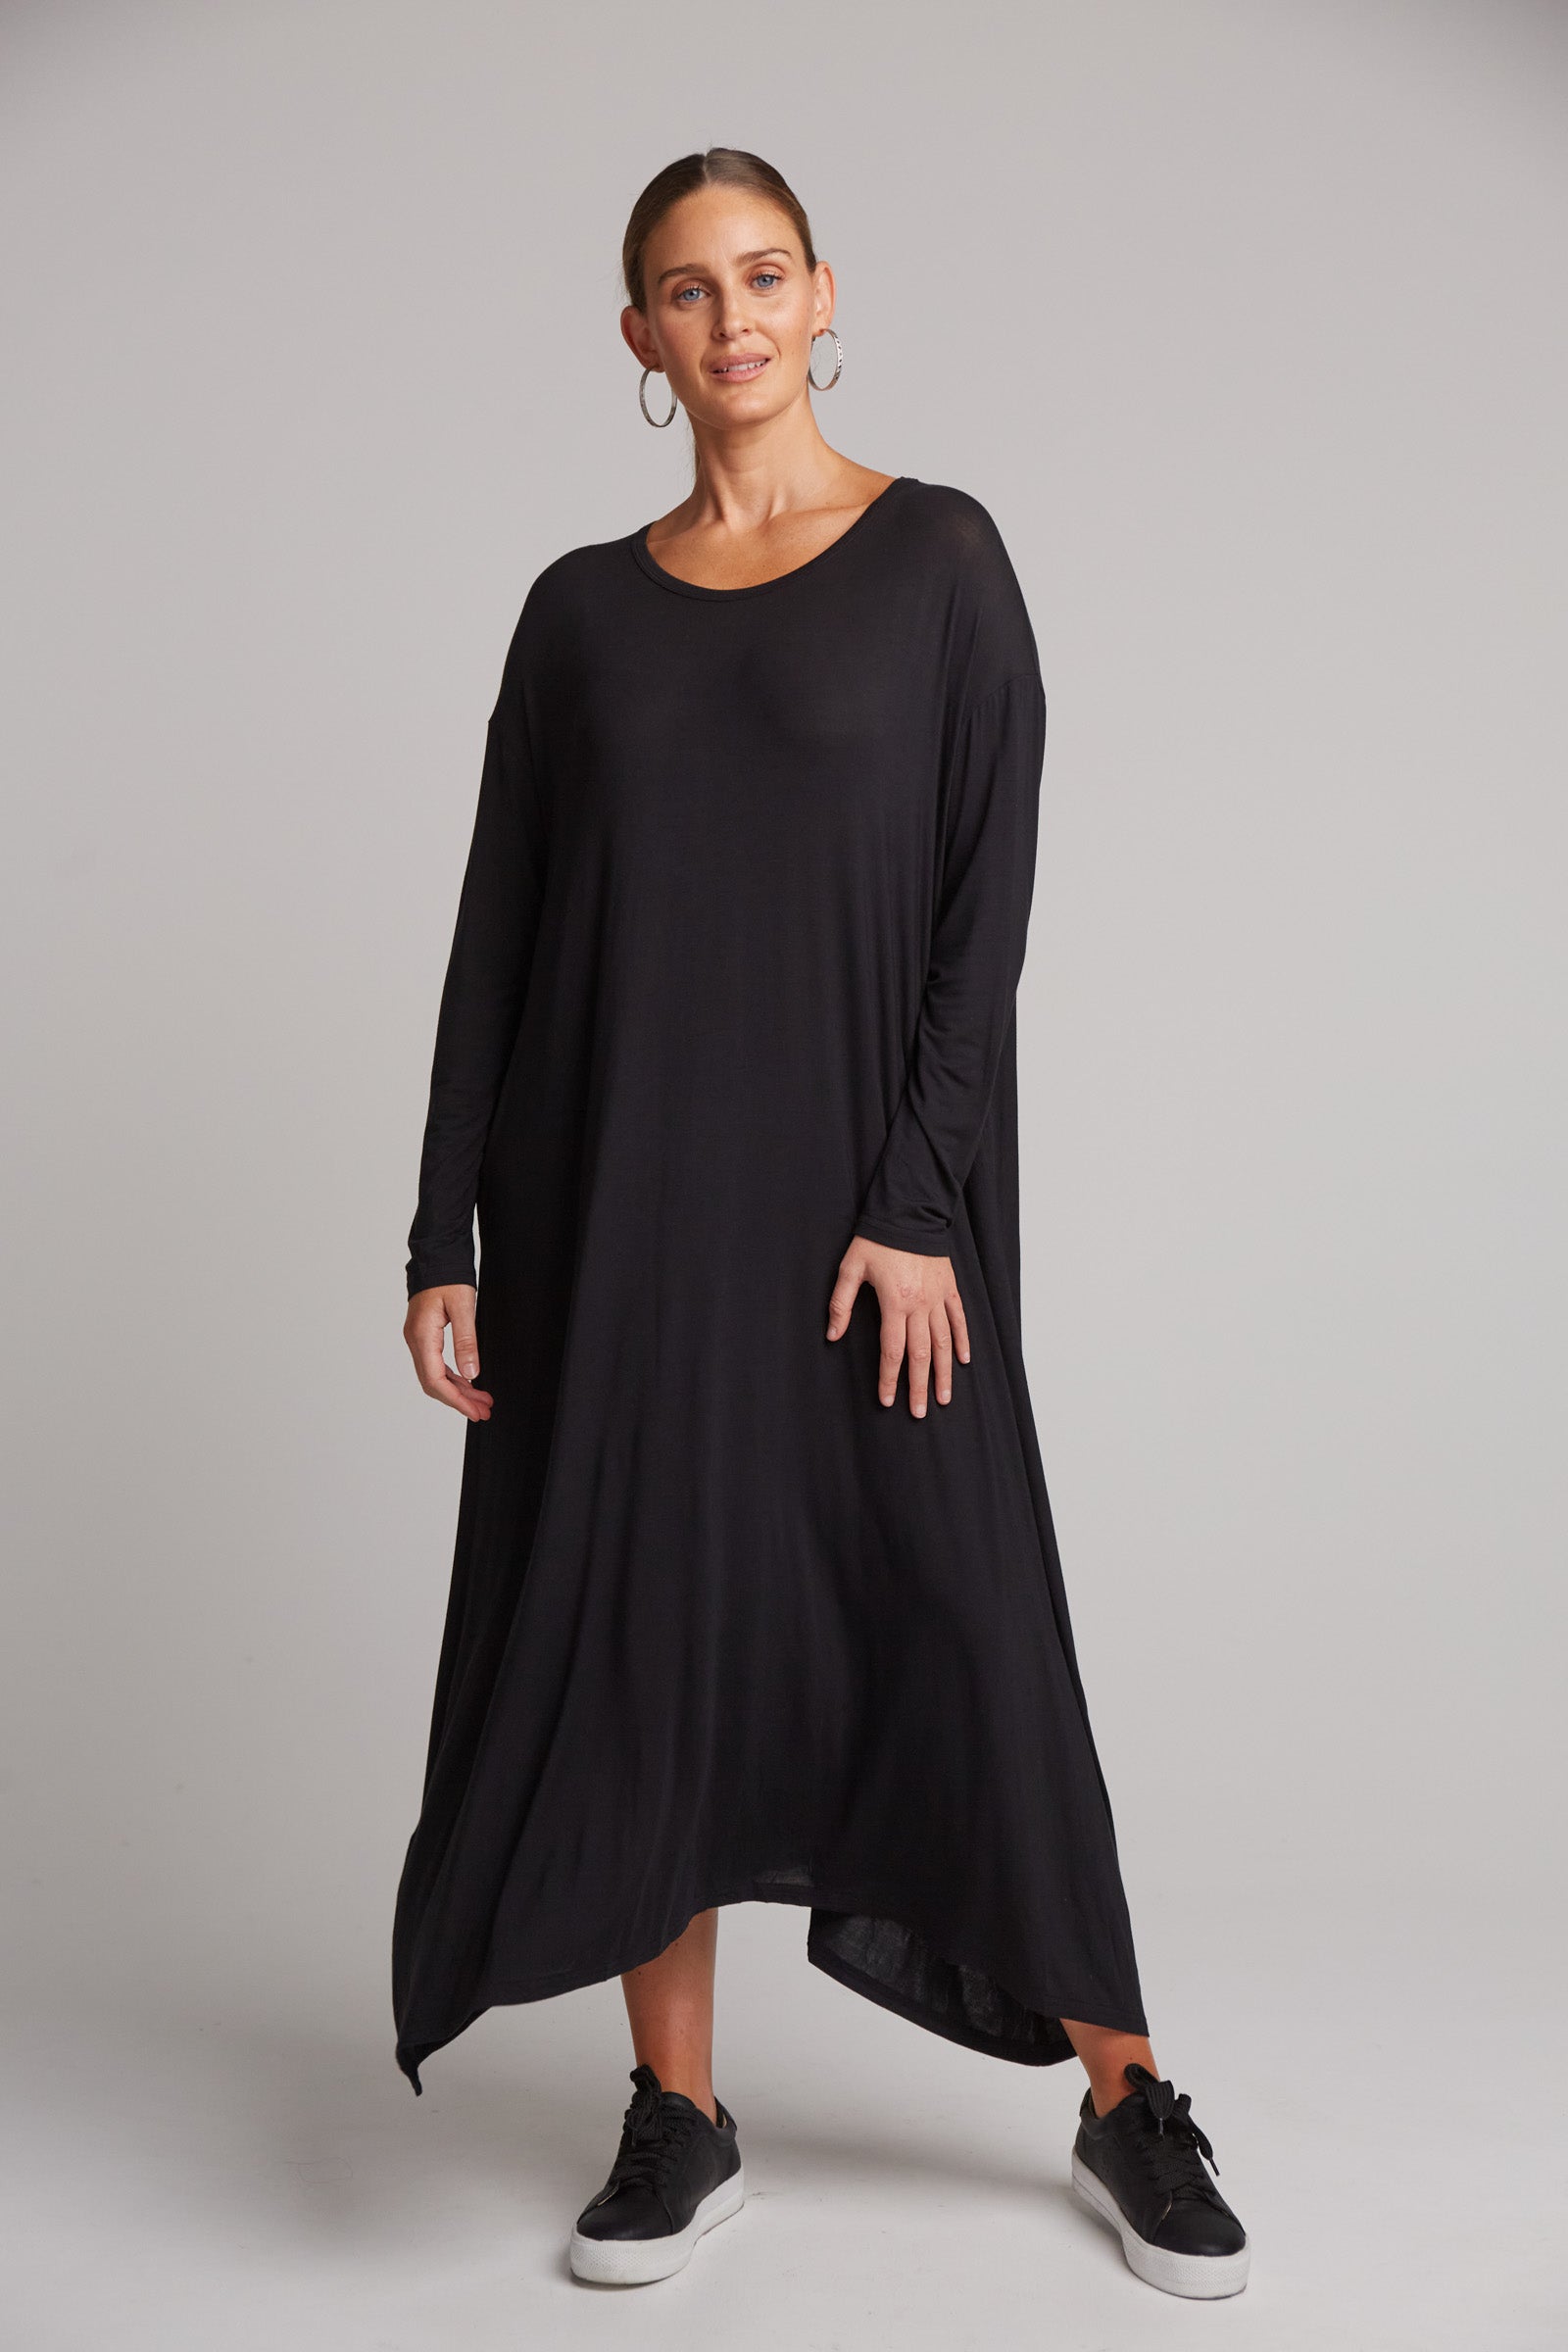 Studio Jersey Dress - Ebony - eb&ive Clothing - Dress Maxi